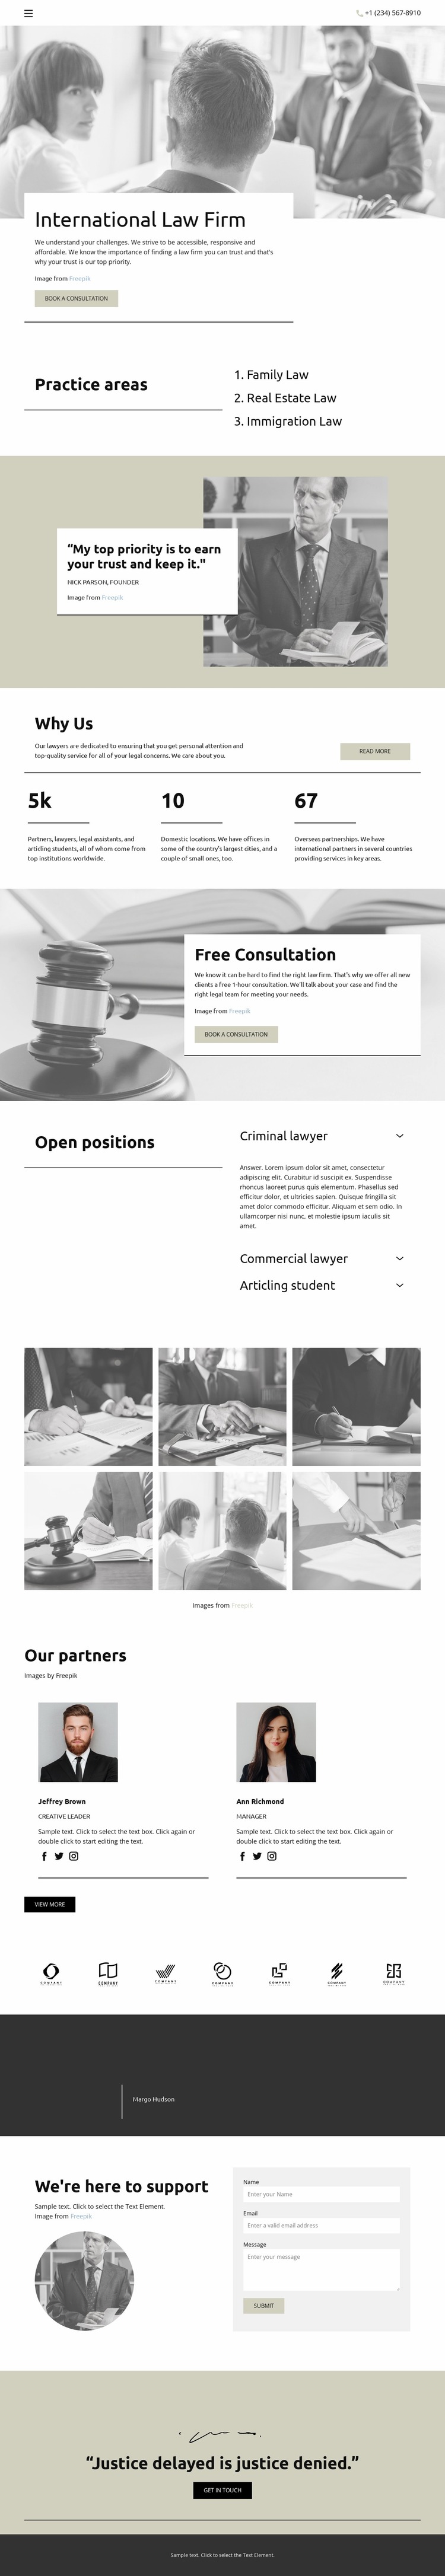 International Law Firm Website Mockup